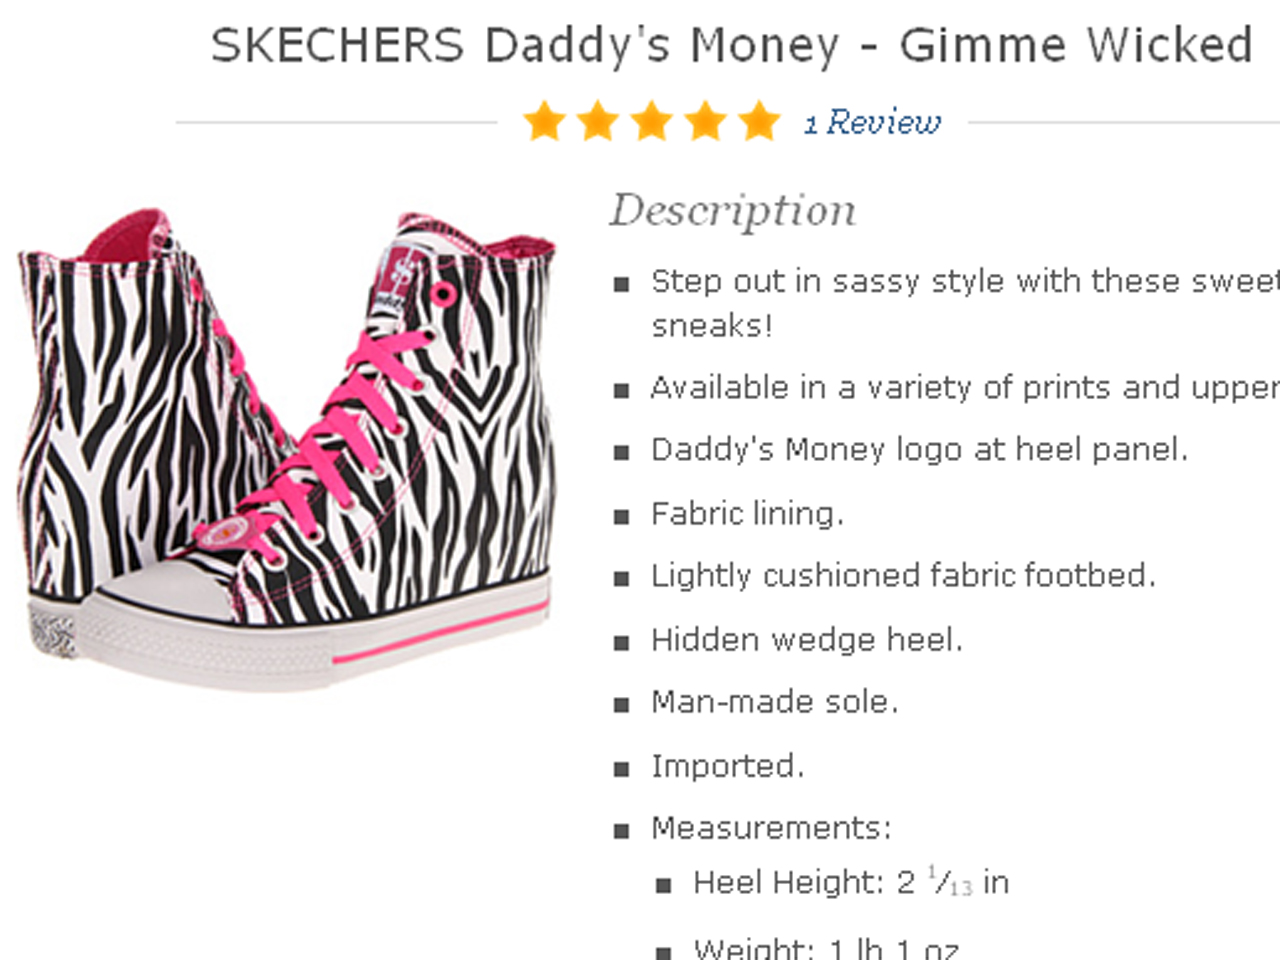 Moms angry over Skechers' 'Daddy's Money' for tweens